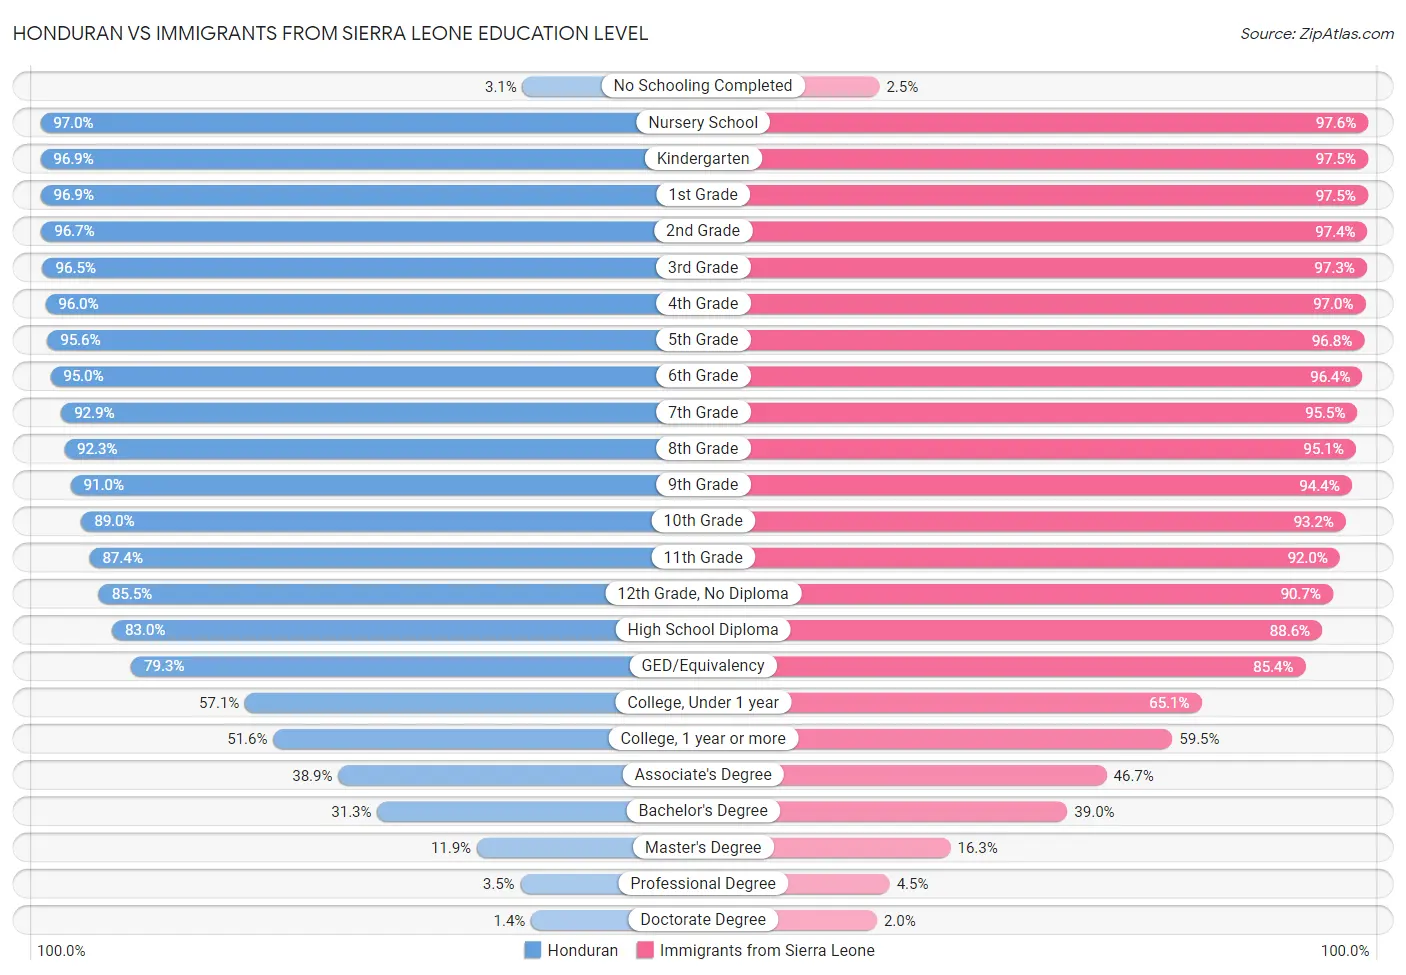 Honduran vs Immigrants from Sierra Leone Education Level